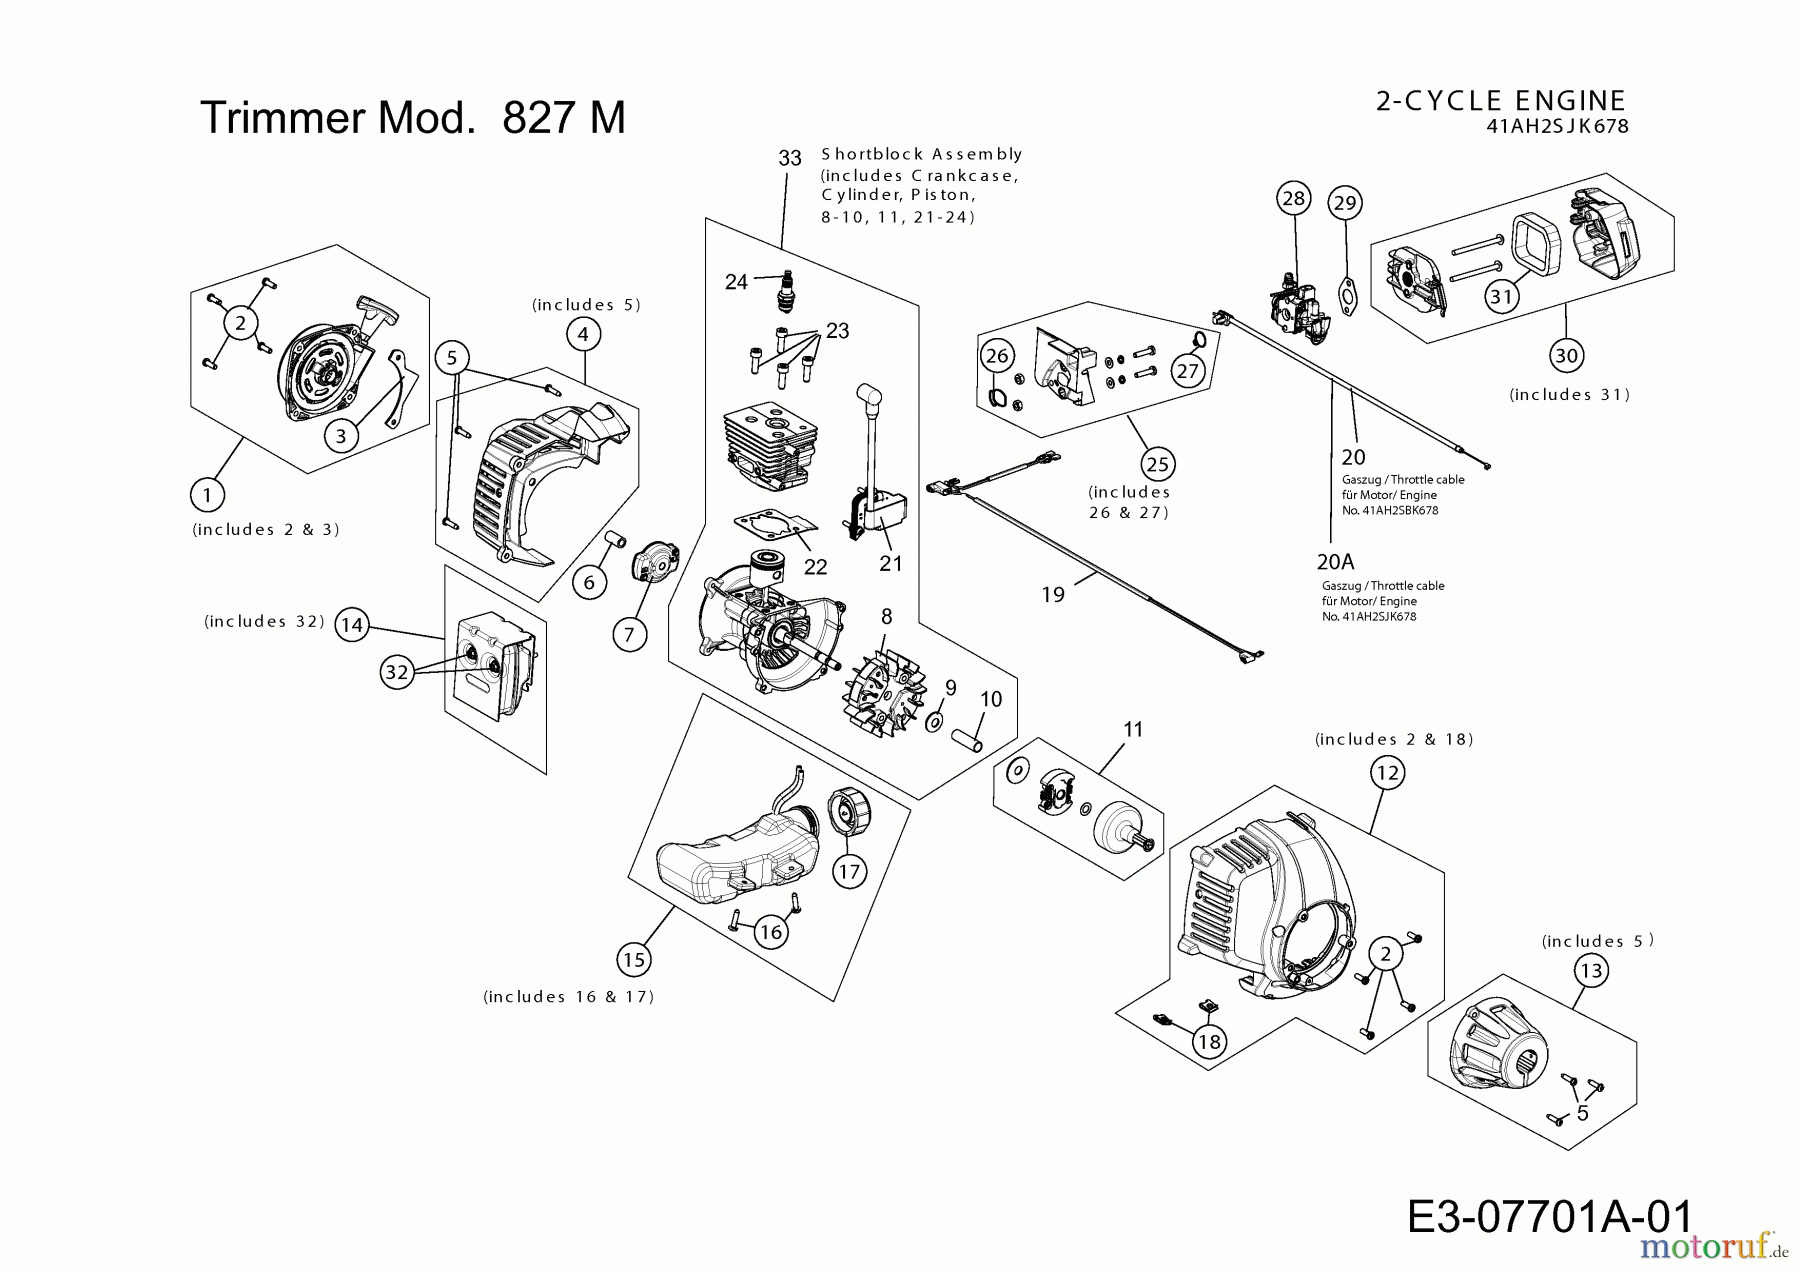  MTD Brush cutter 827 M 41AD7VT-678  (2012) Engine